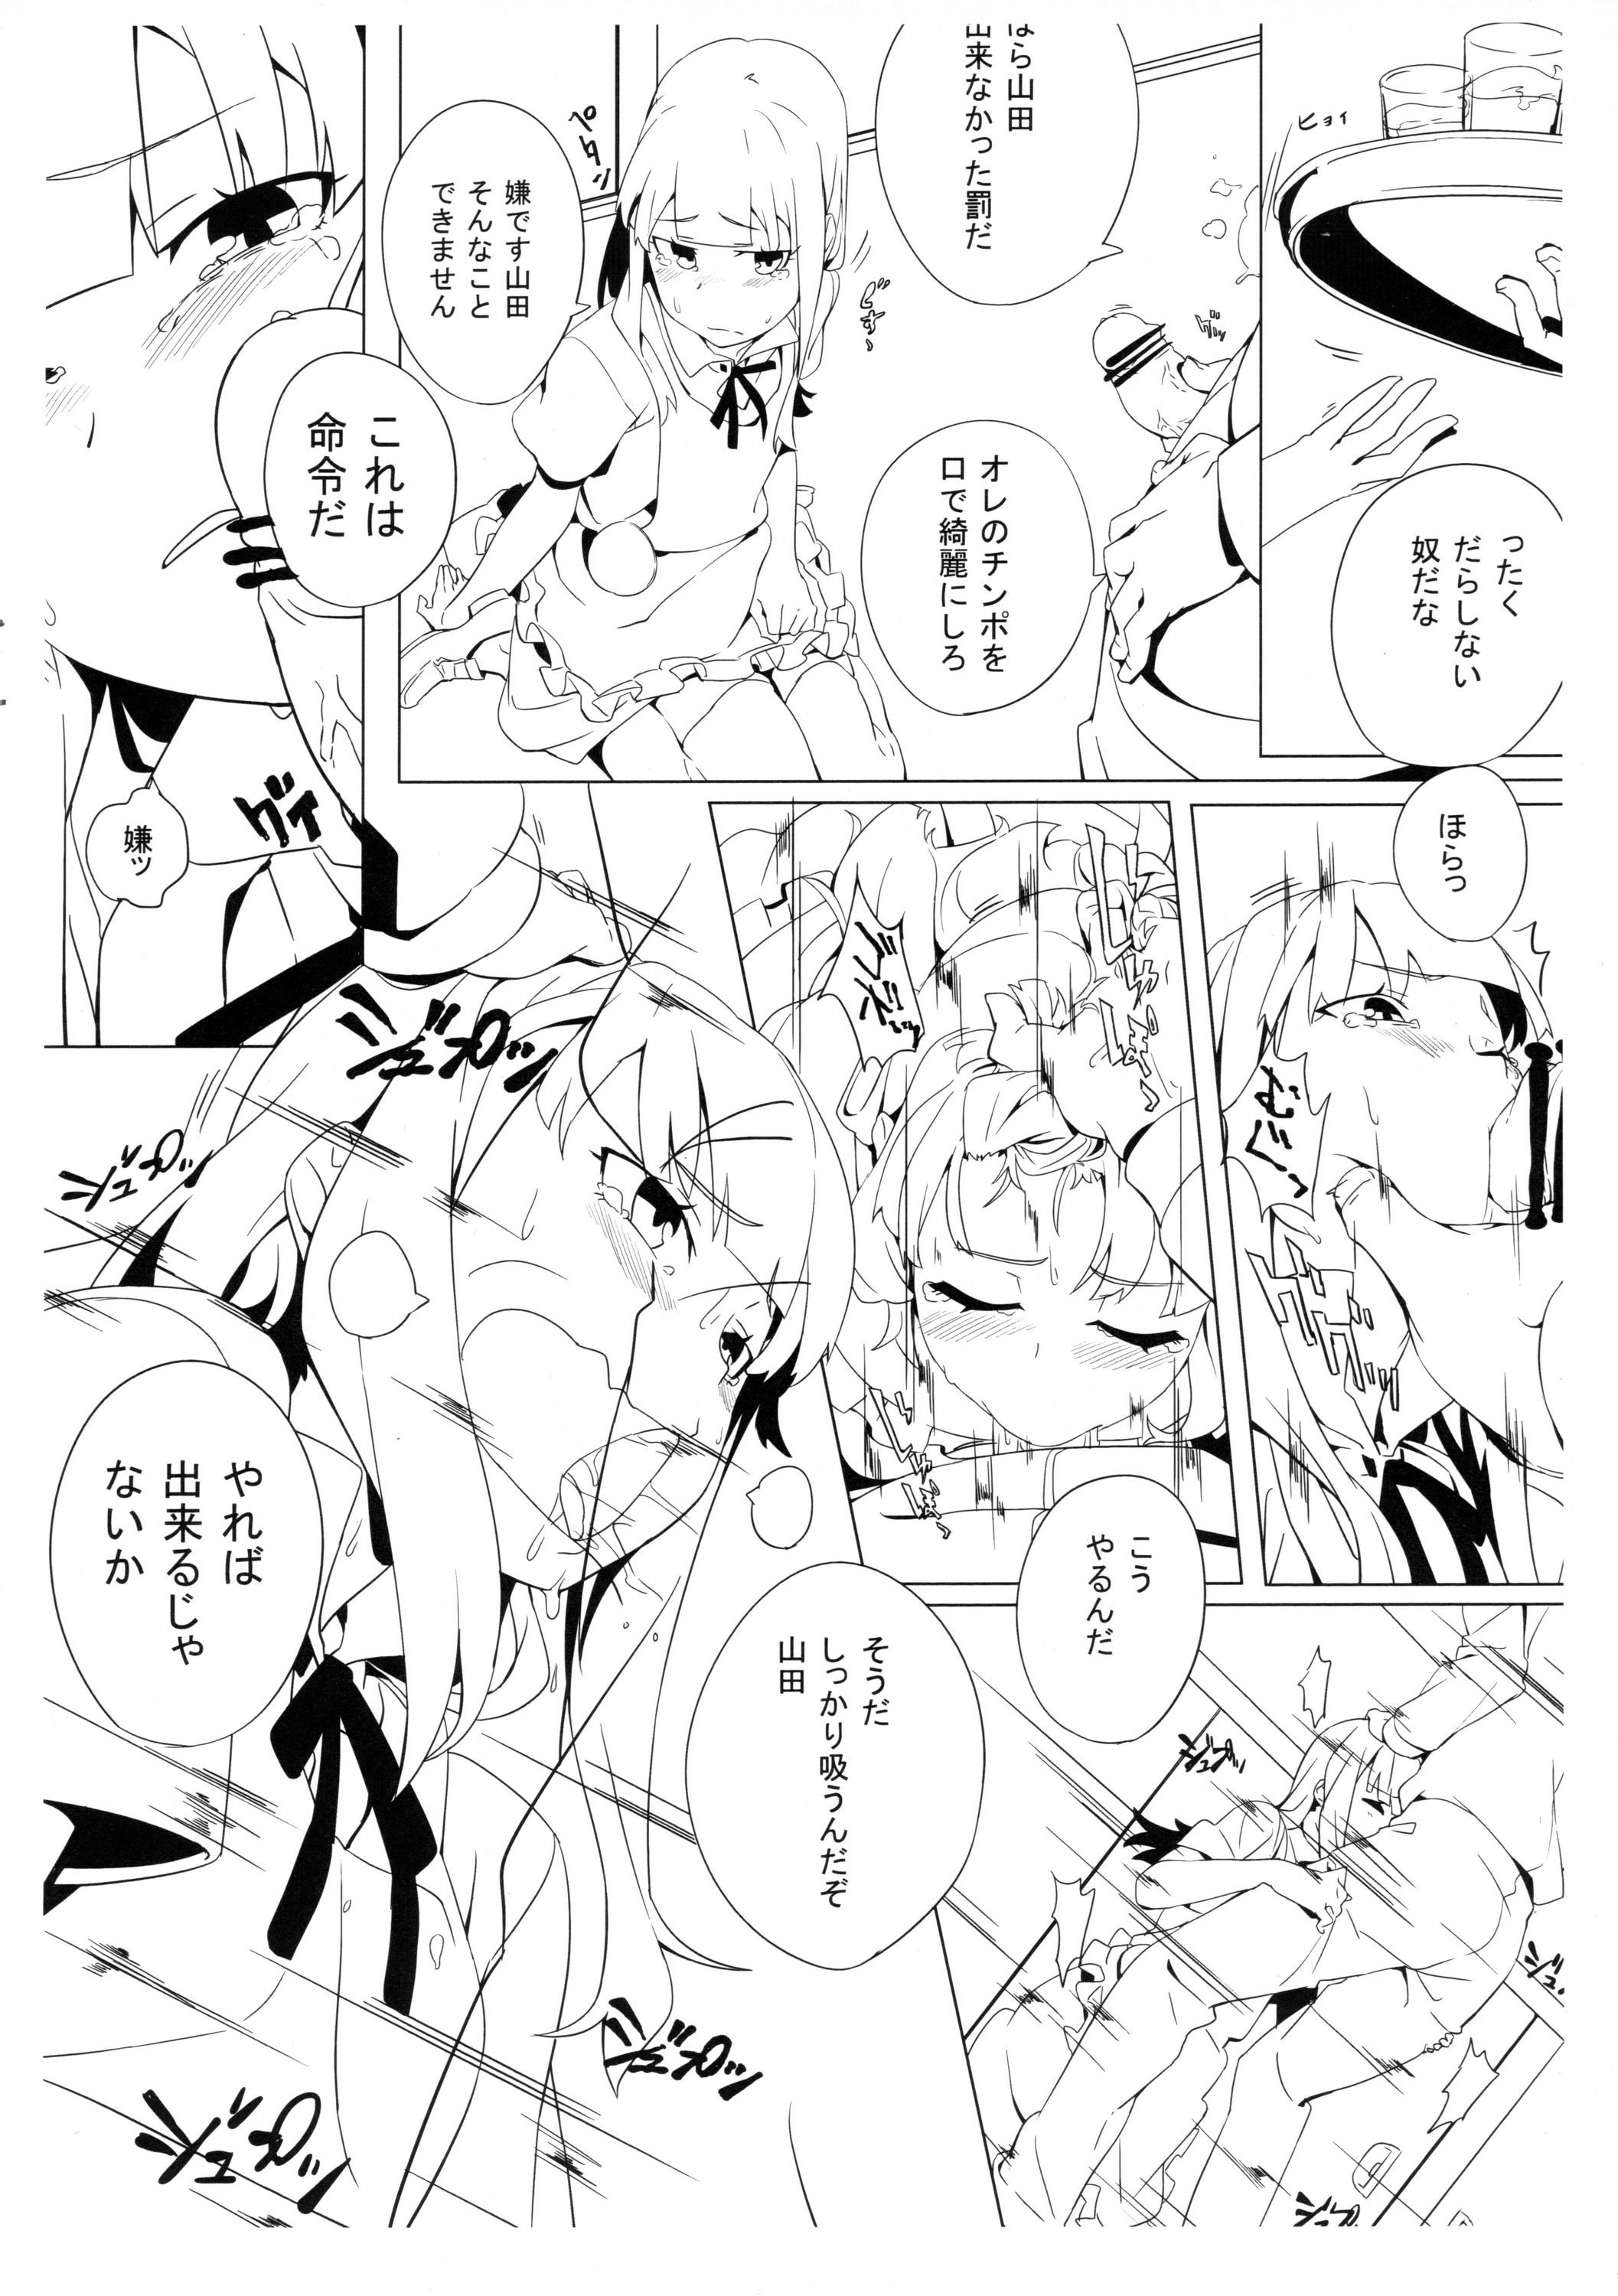 Naughty Shinya Working!! Tsuika Order - Working Porra - Page 8